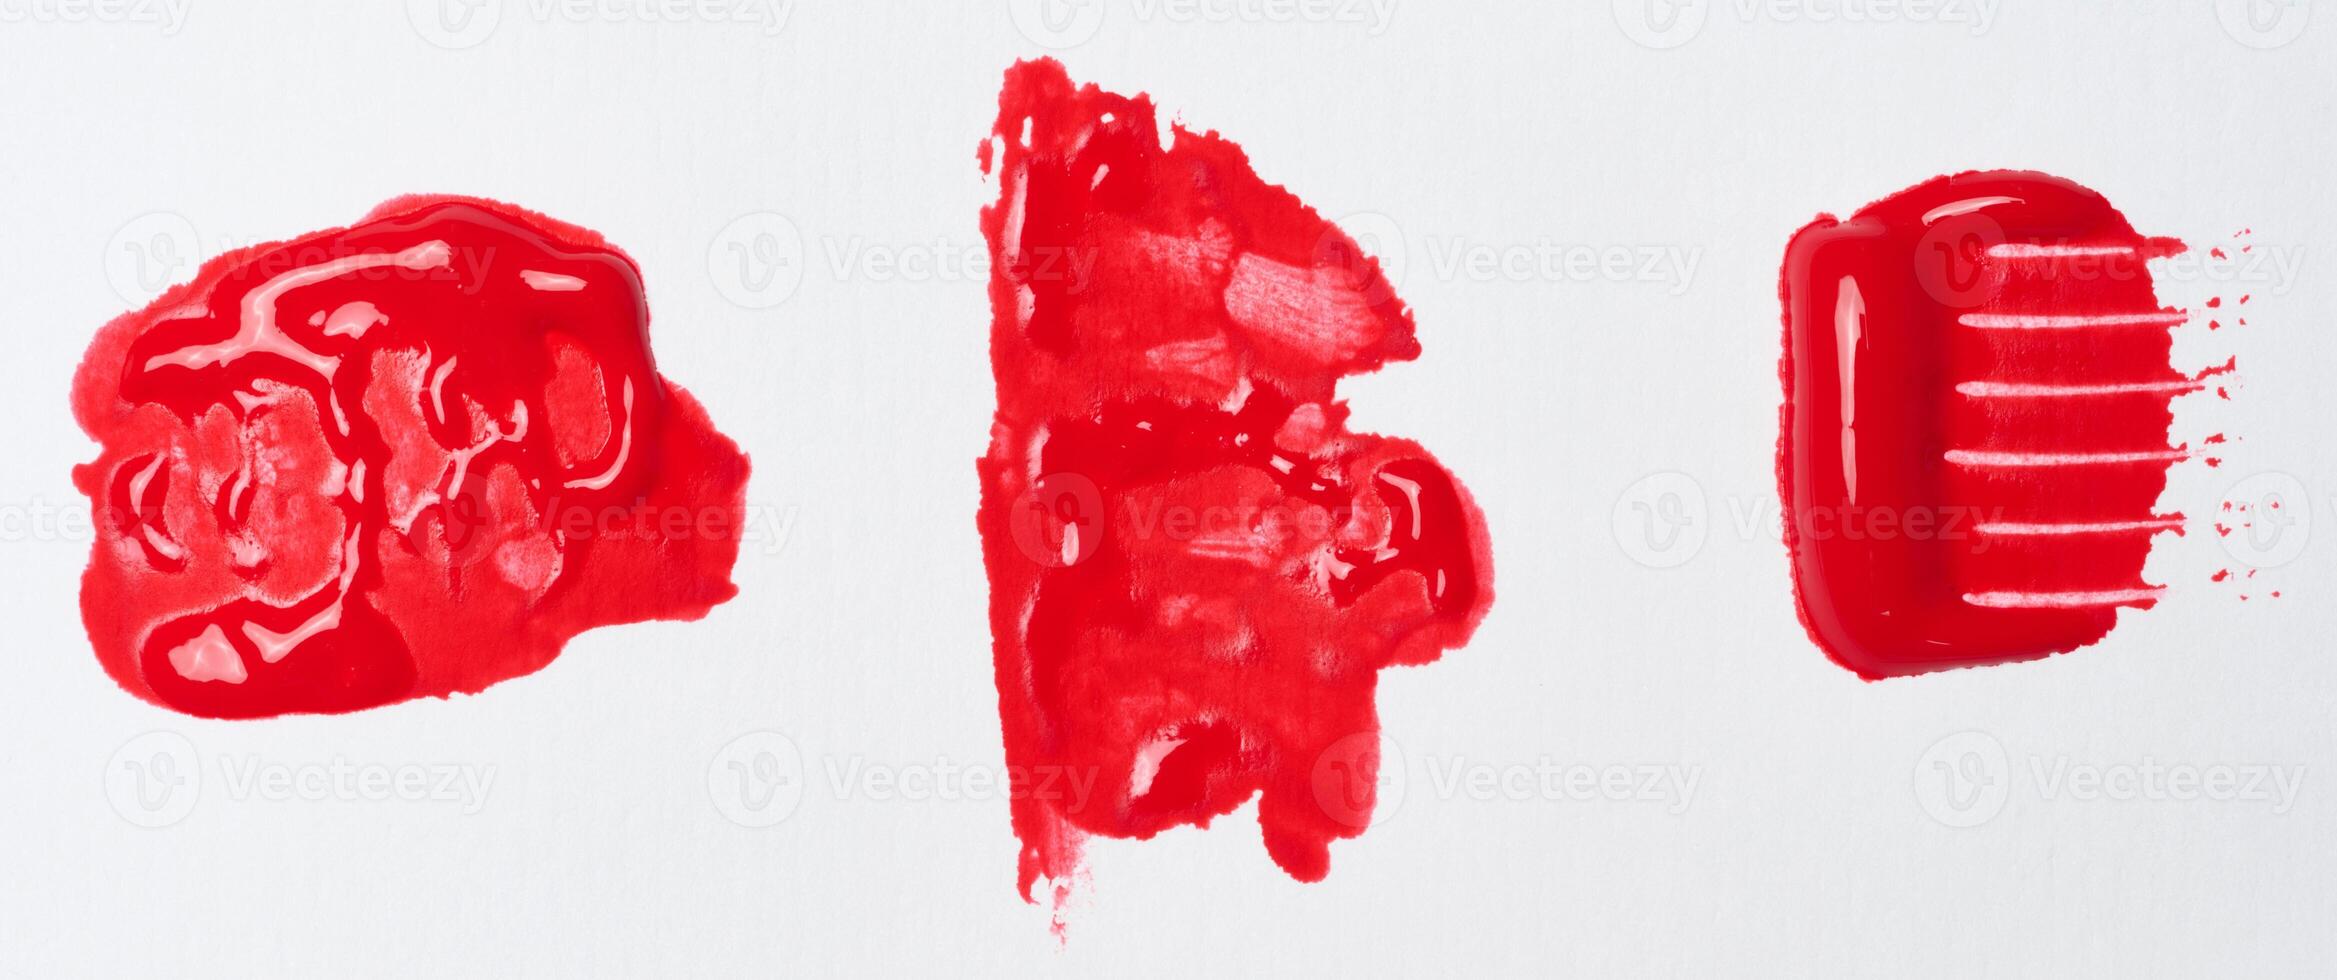 acuarela cepillo carrera de rojo pintar en un blanco aislado antecedentes foto